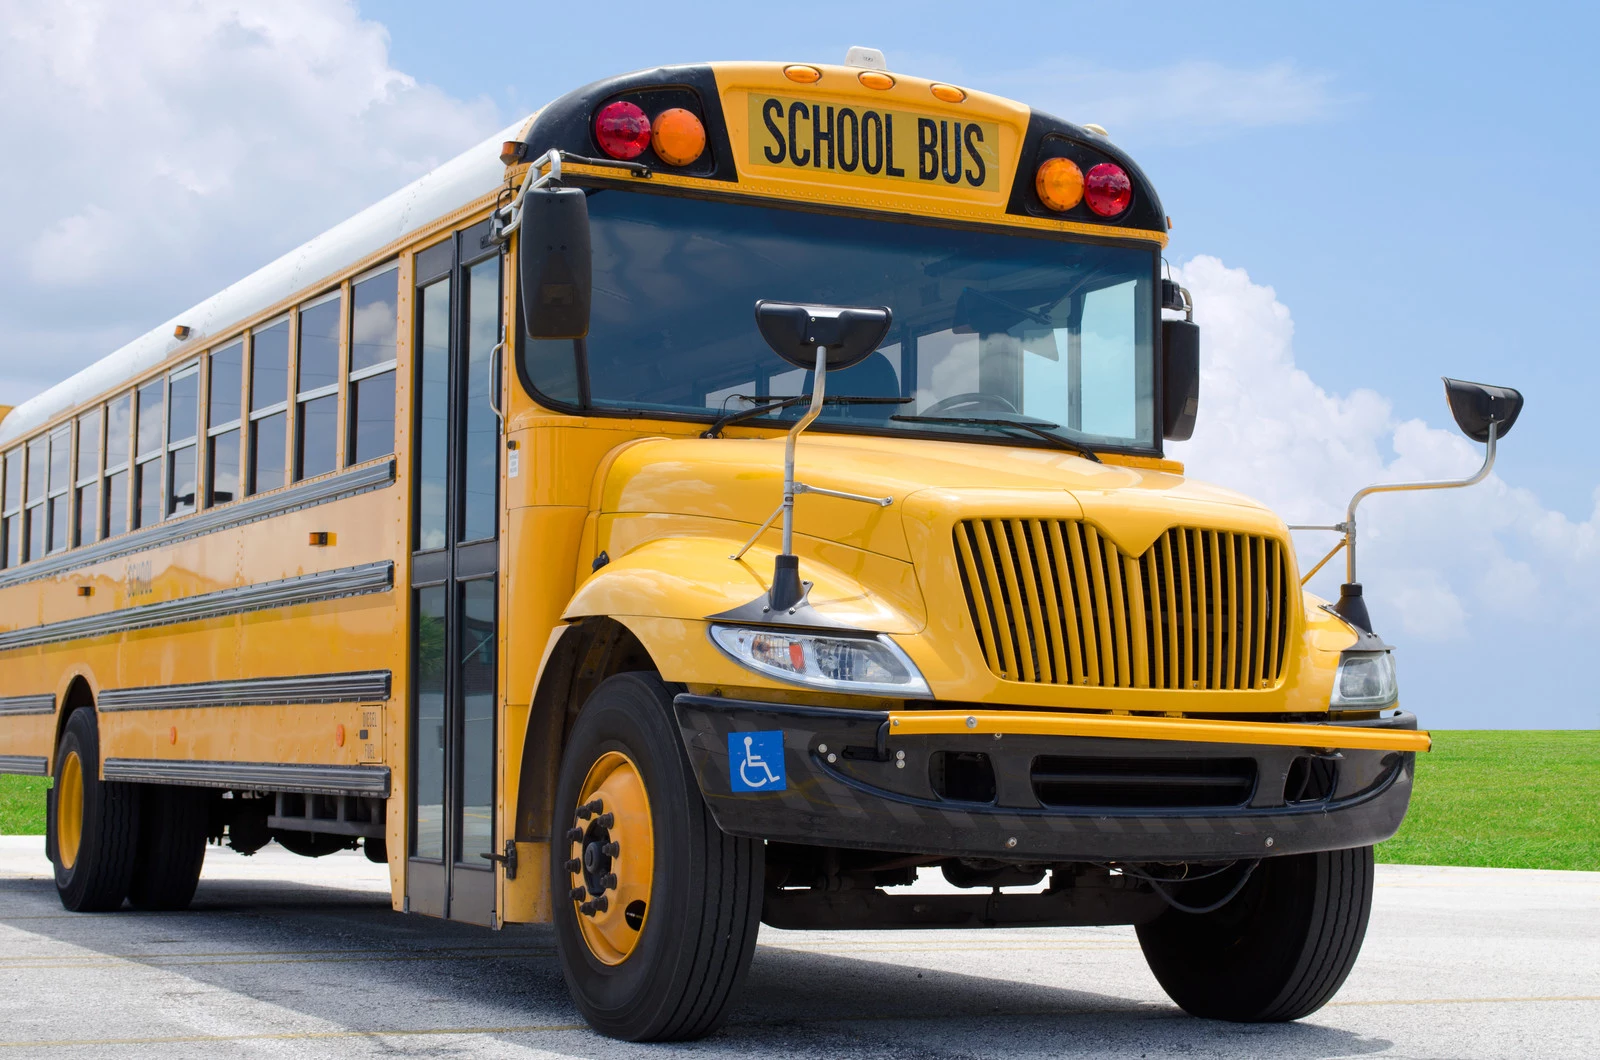 bristol township school district transportation jobs